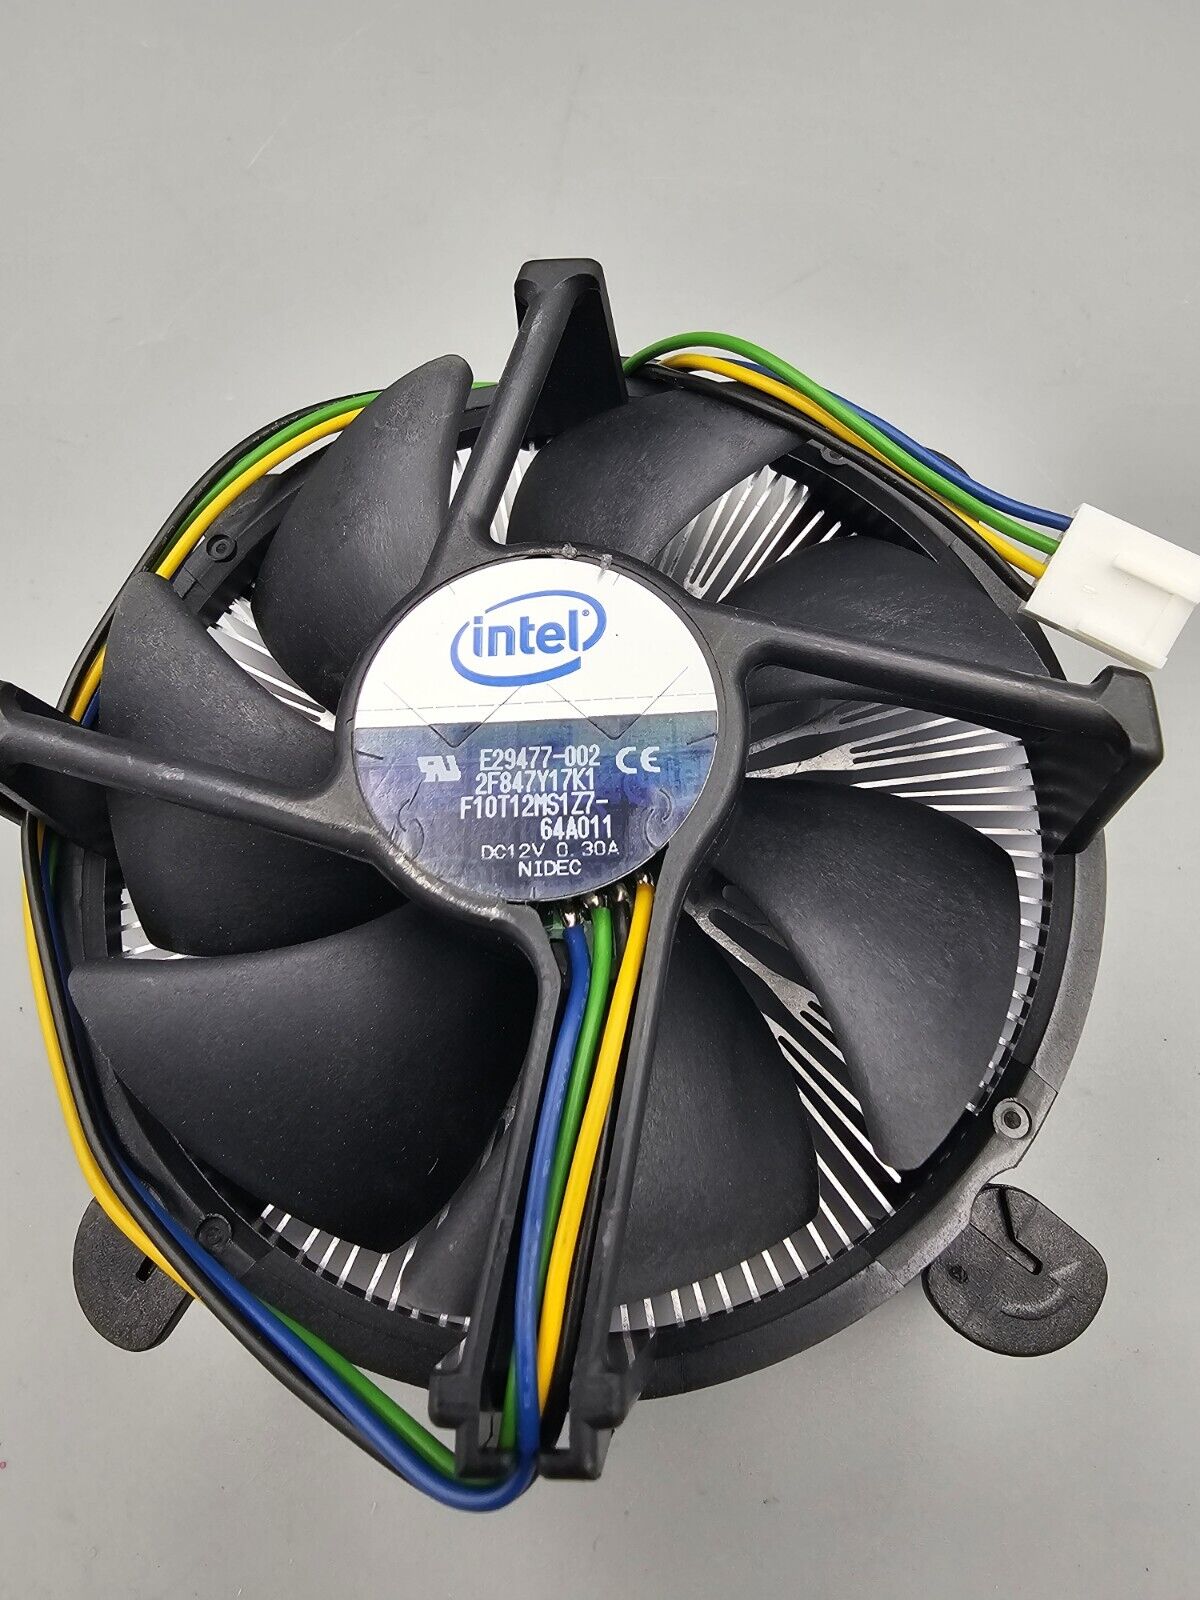 Intel E29477-002 CPU Cooler, Aluminum Heatsink